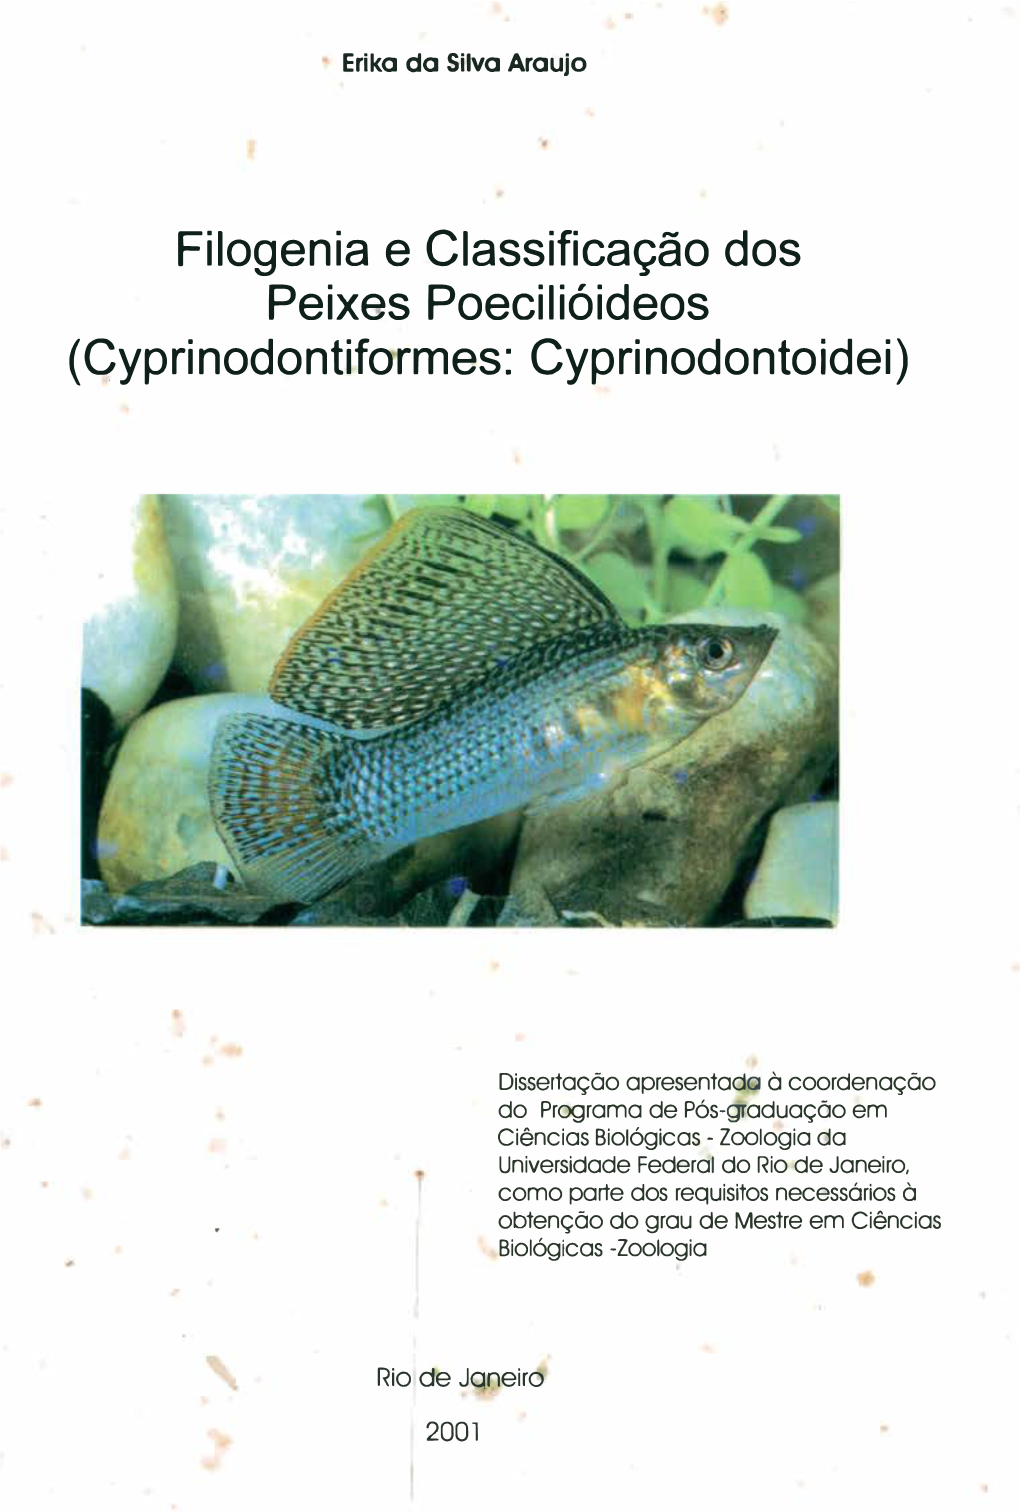 Cyprinodontiformes: Cyprinodontoidei)